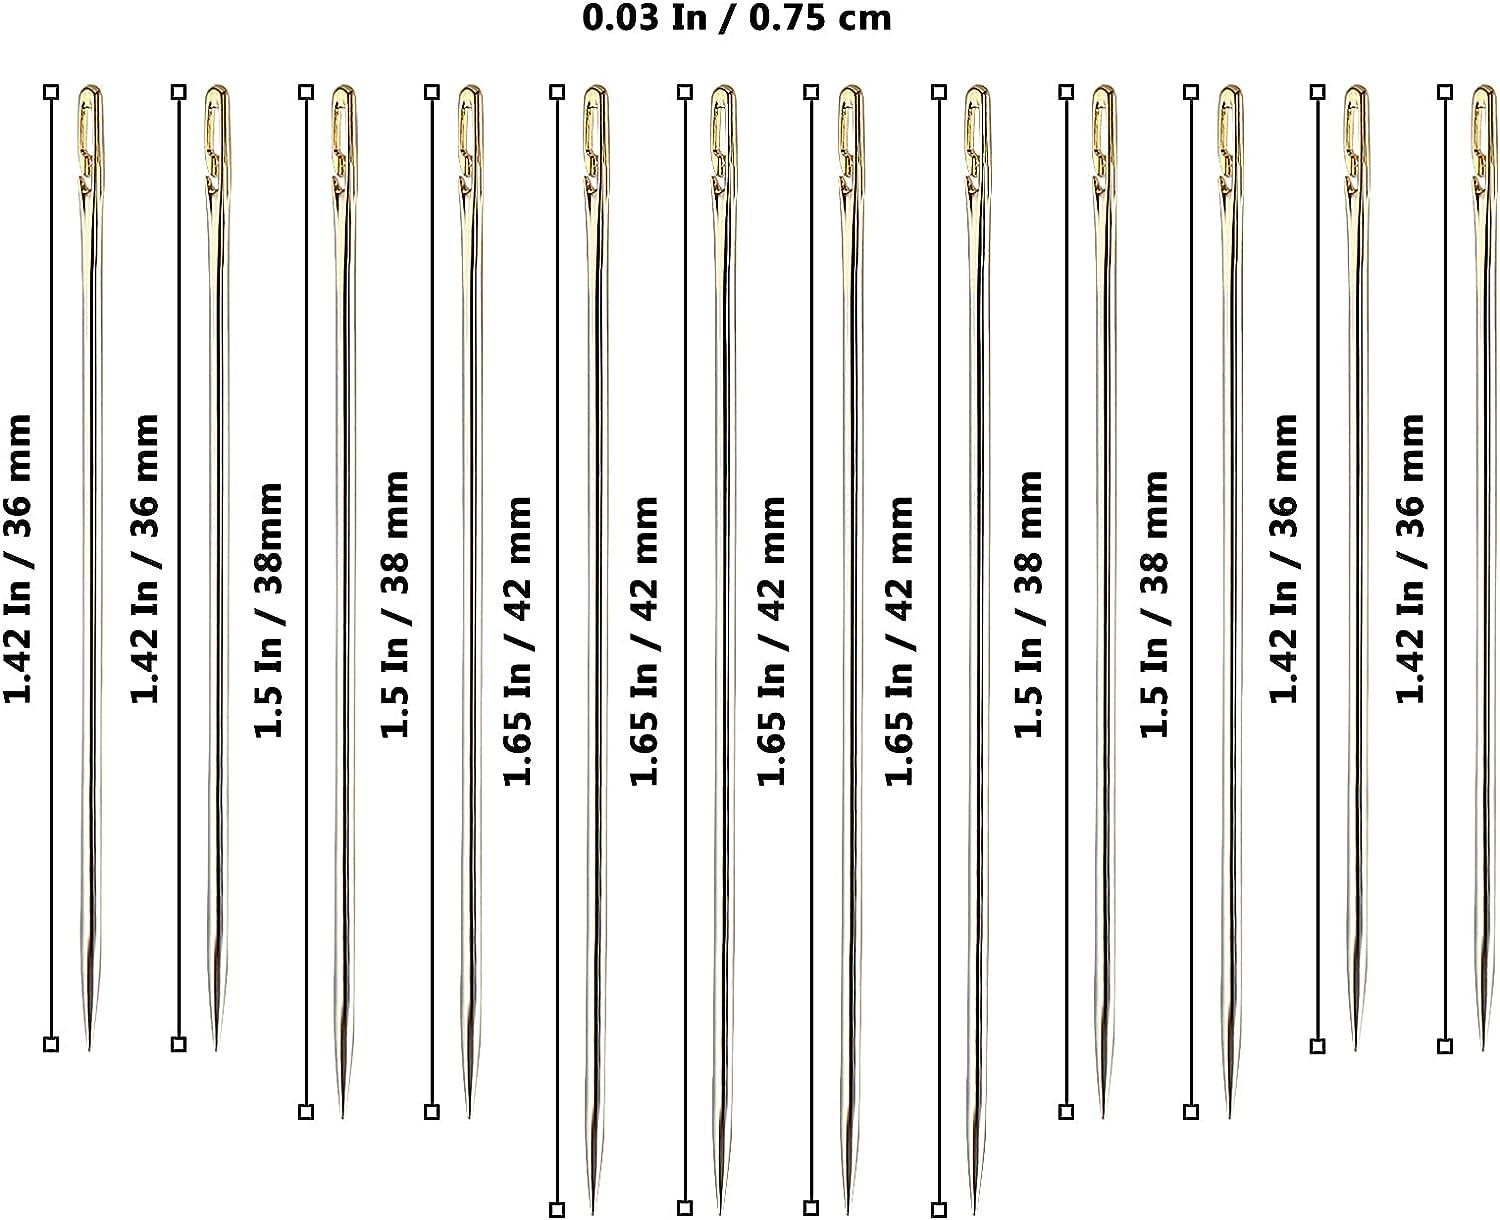 MUKLEI 48 Pack Self-Threading Needles, 3 Sizes Stainless Steel